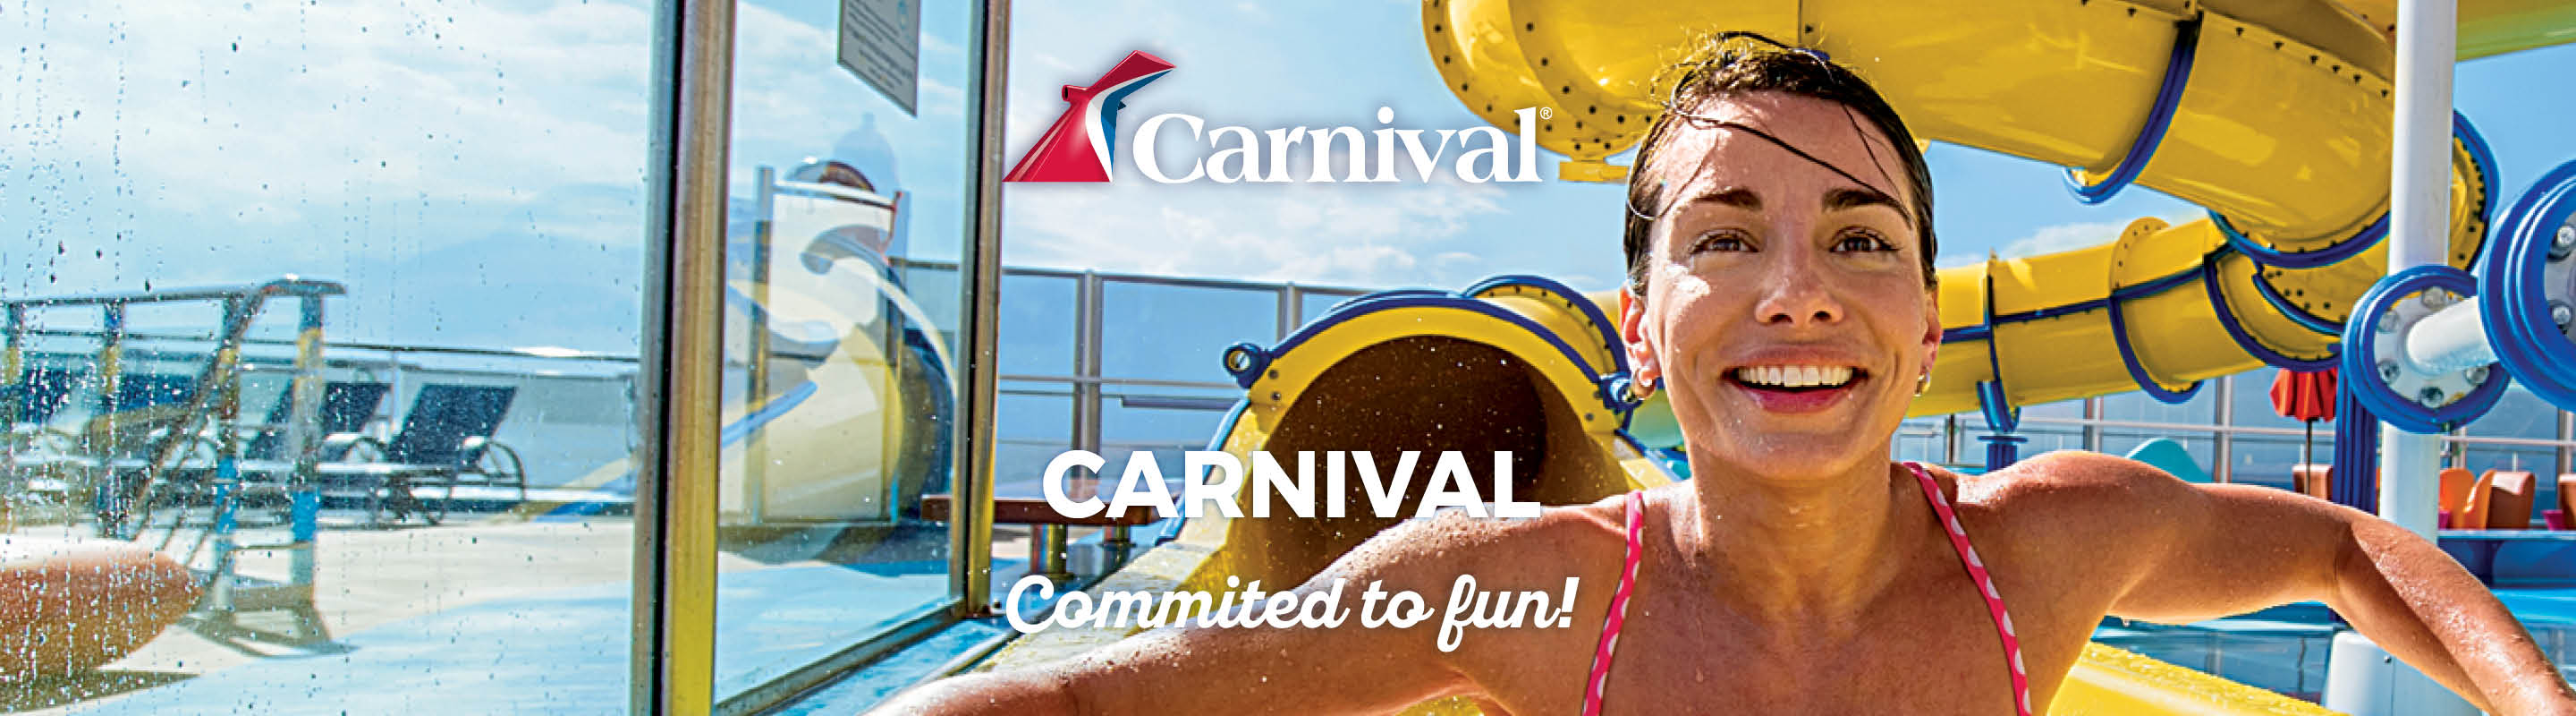 carnival-cruise-offers.jpg